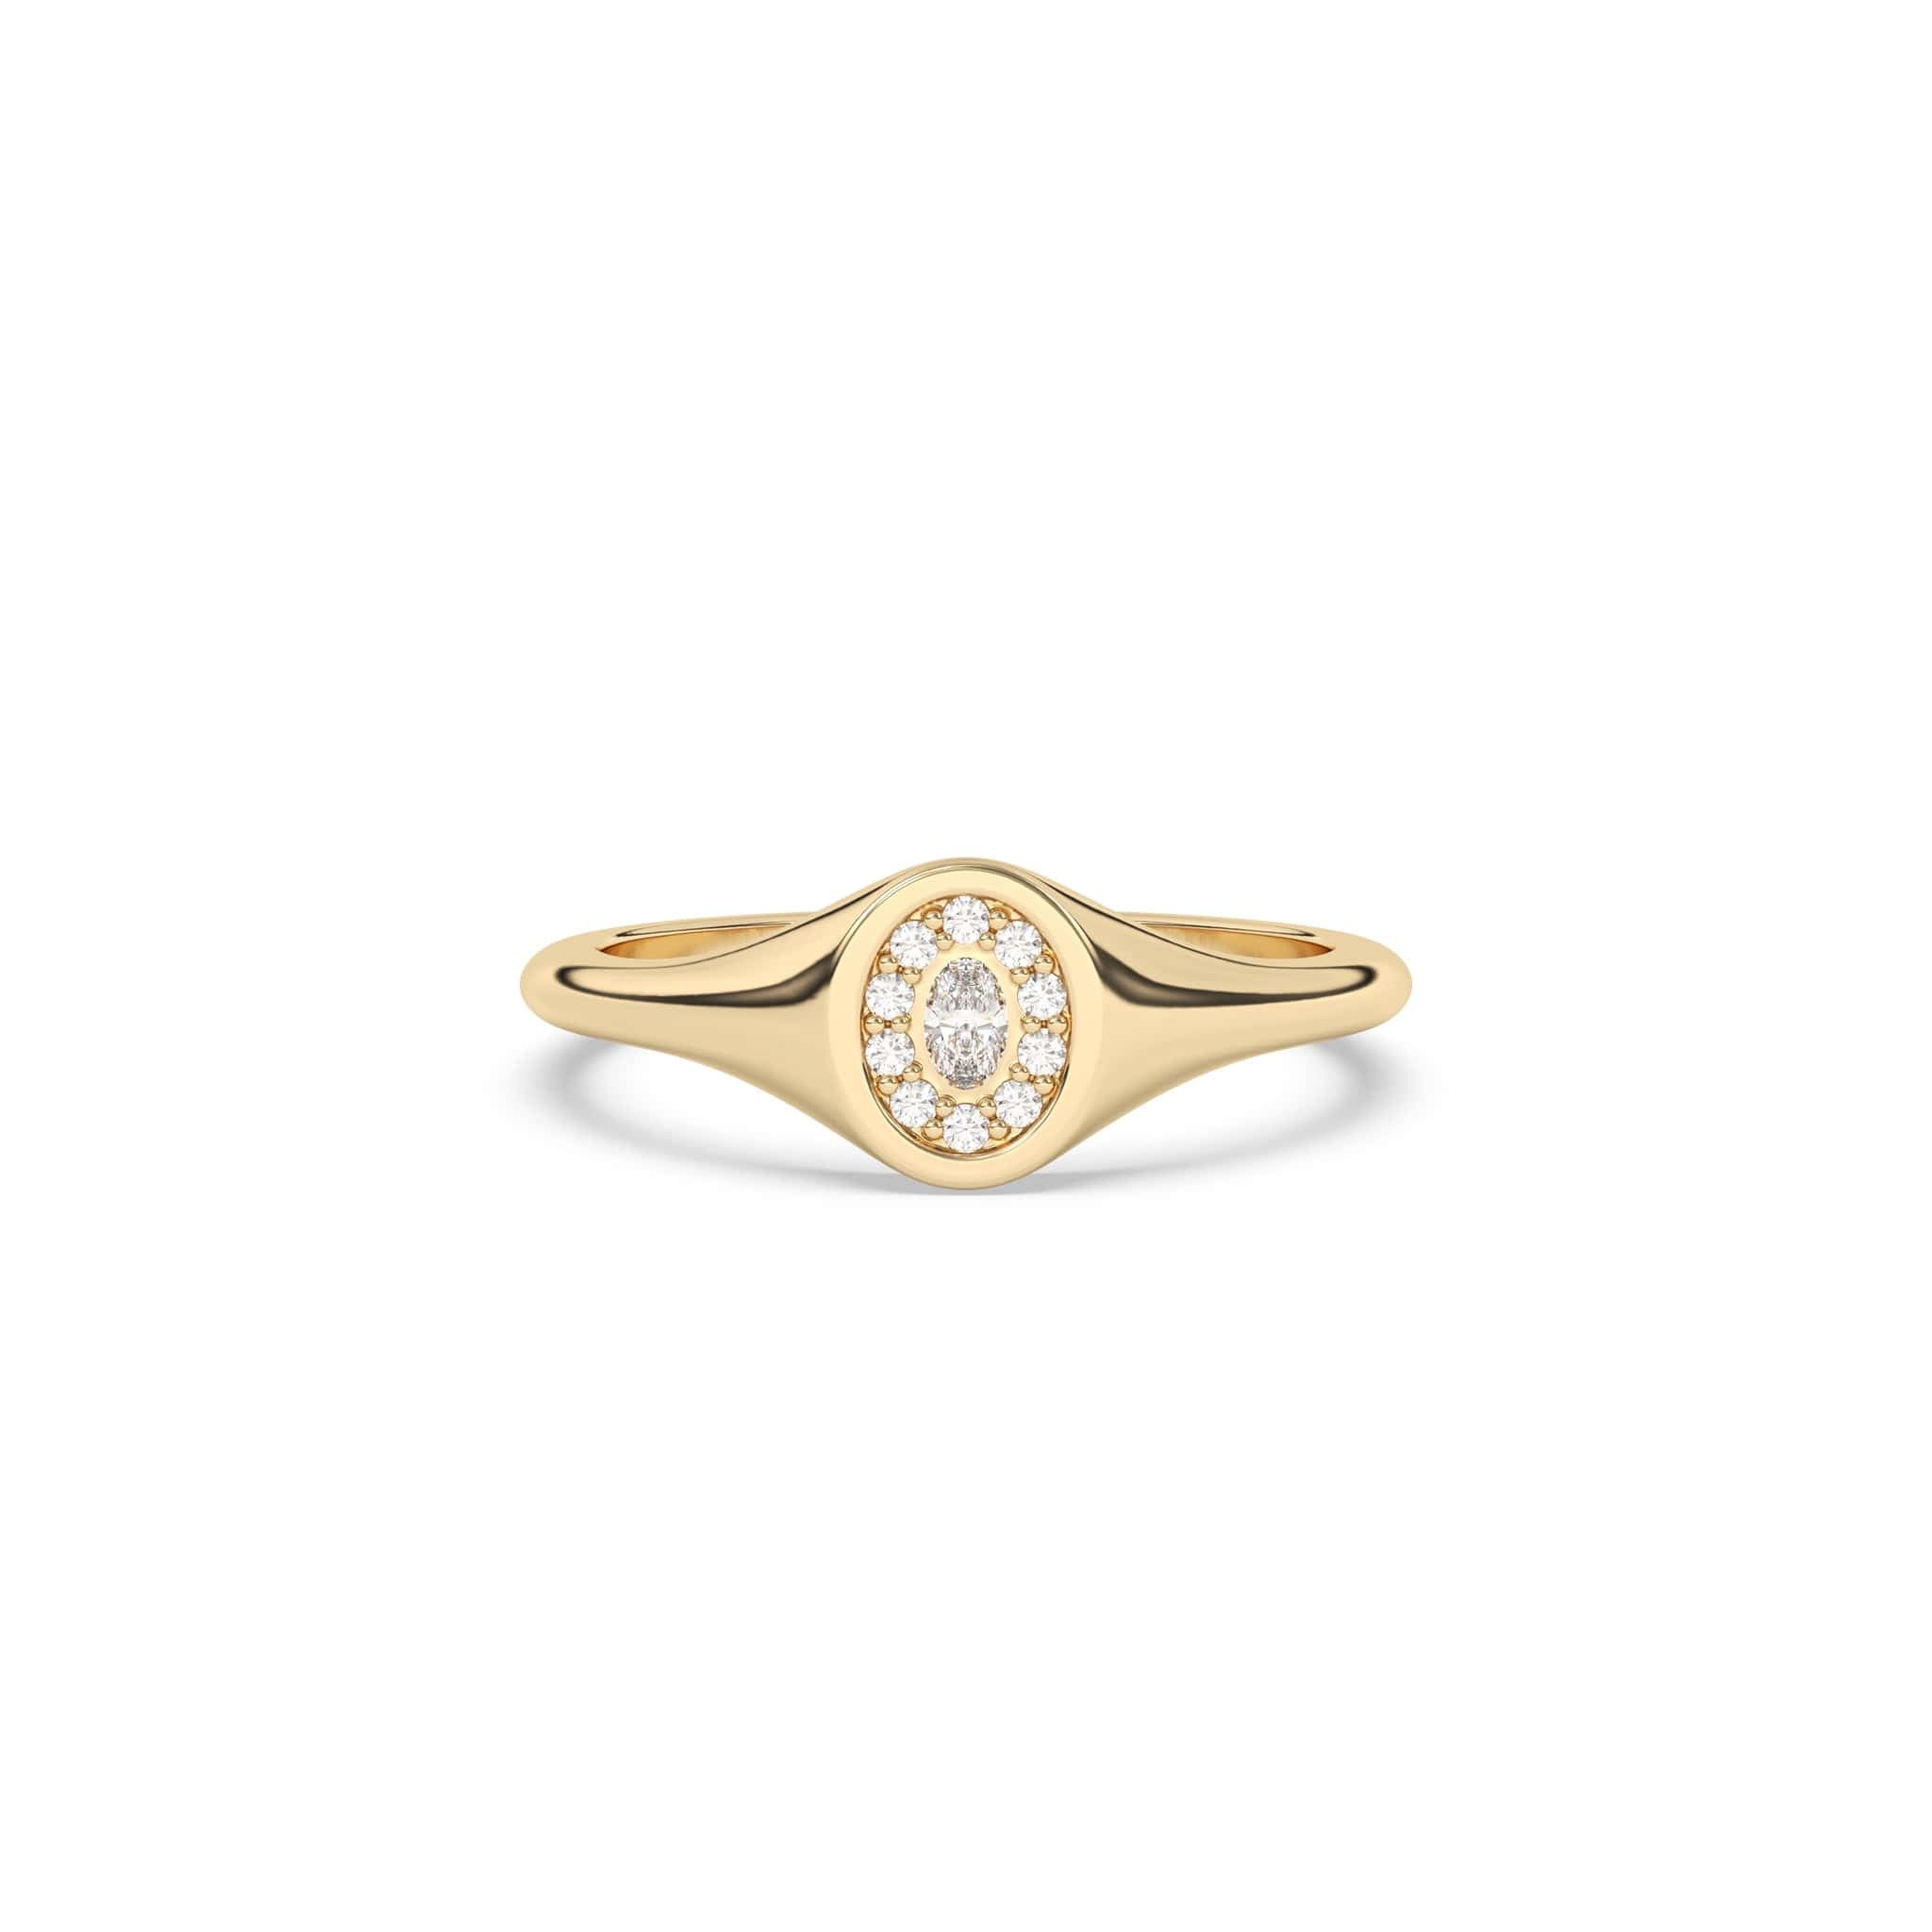 Buy Diamond Signet Ring, Gold Signet Ring, Gold Pinky Ring, Pinky Signet  Ring, Gold Pinky Ring Womens, Gold Signet Ring Women, 14k Signet Ring  Online in India - Etsy